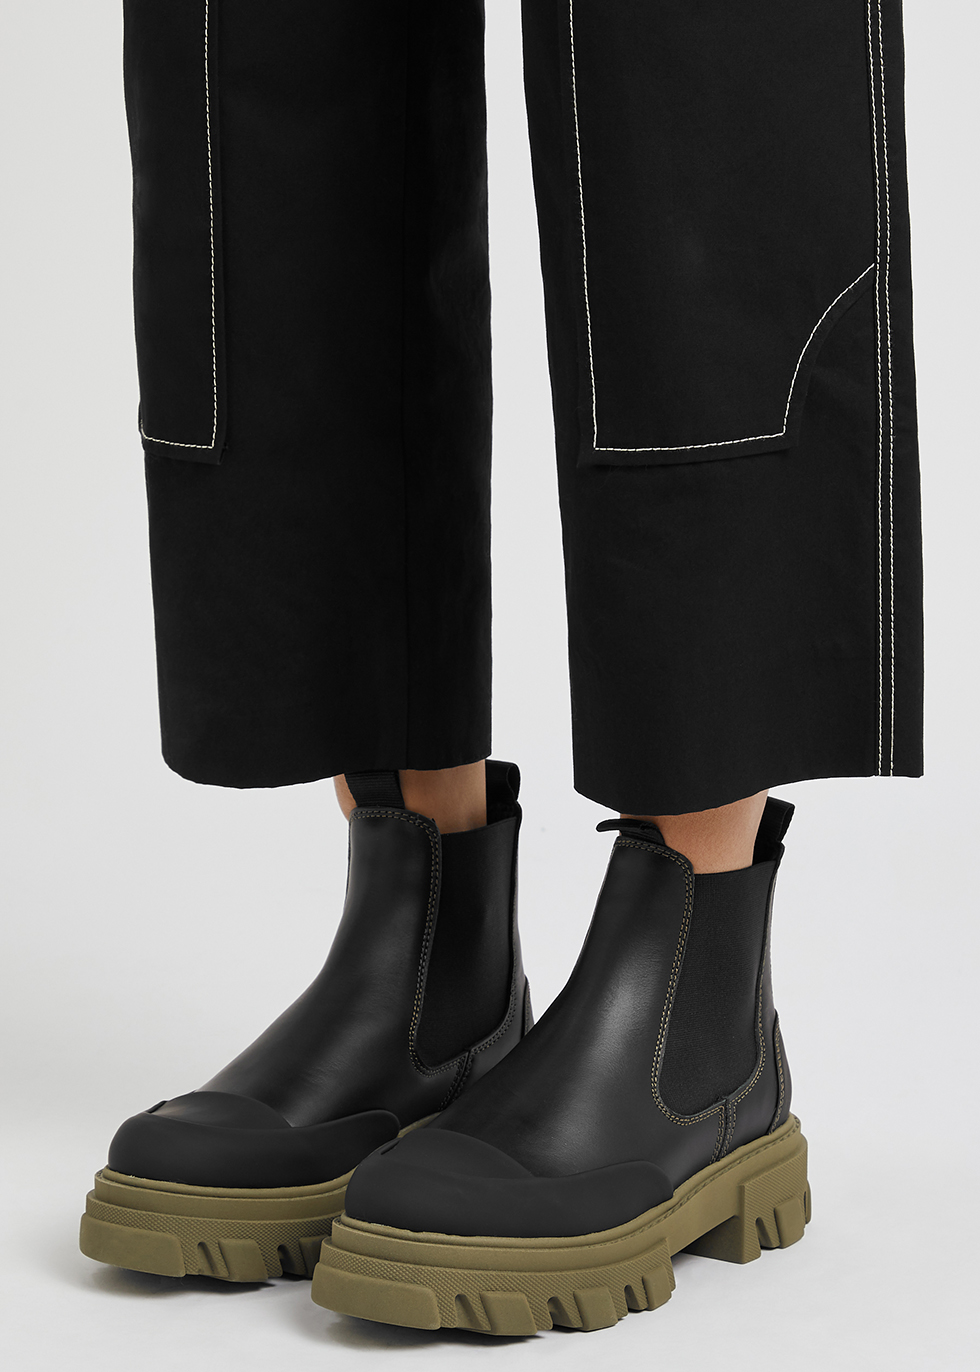 Ganni Black leather Chelsea boots ...